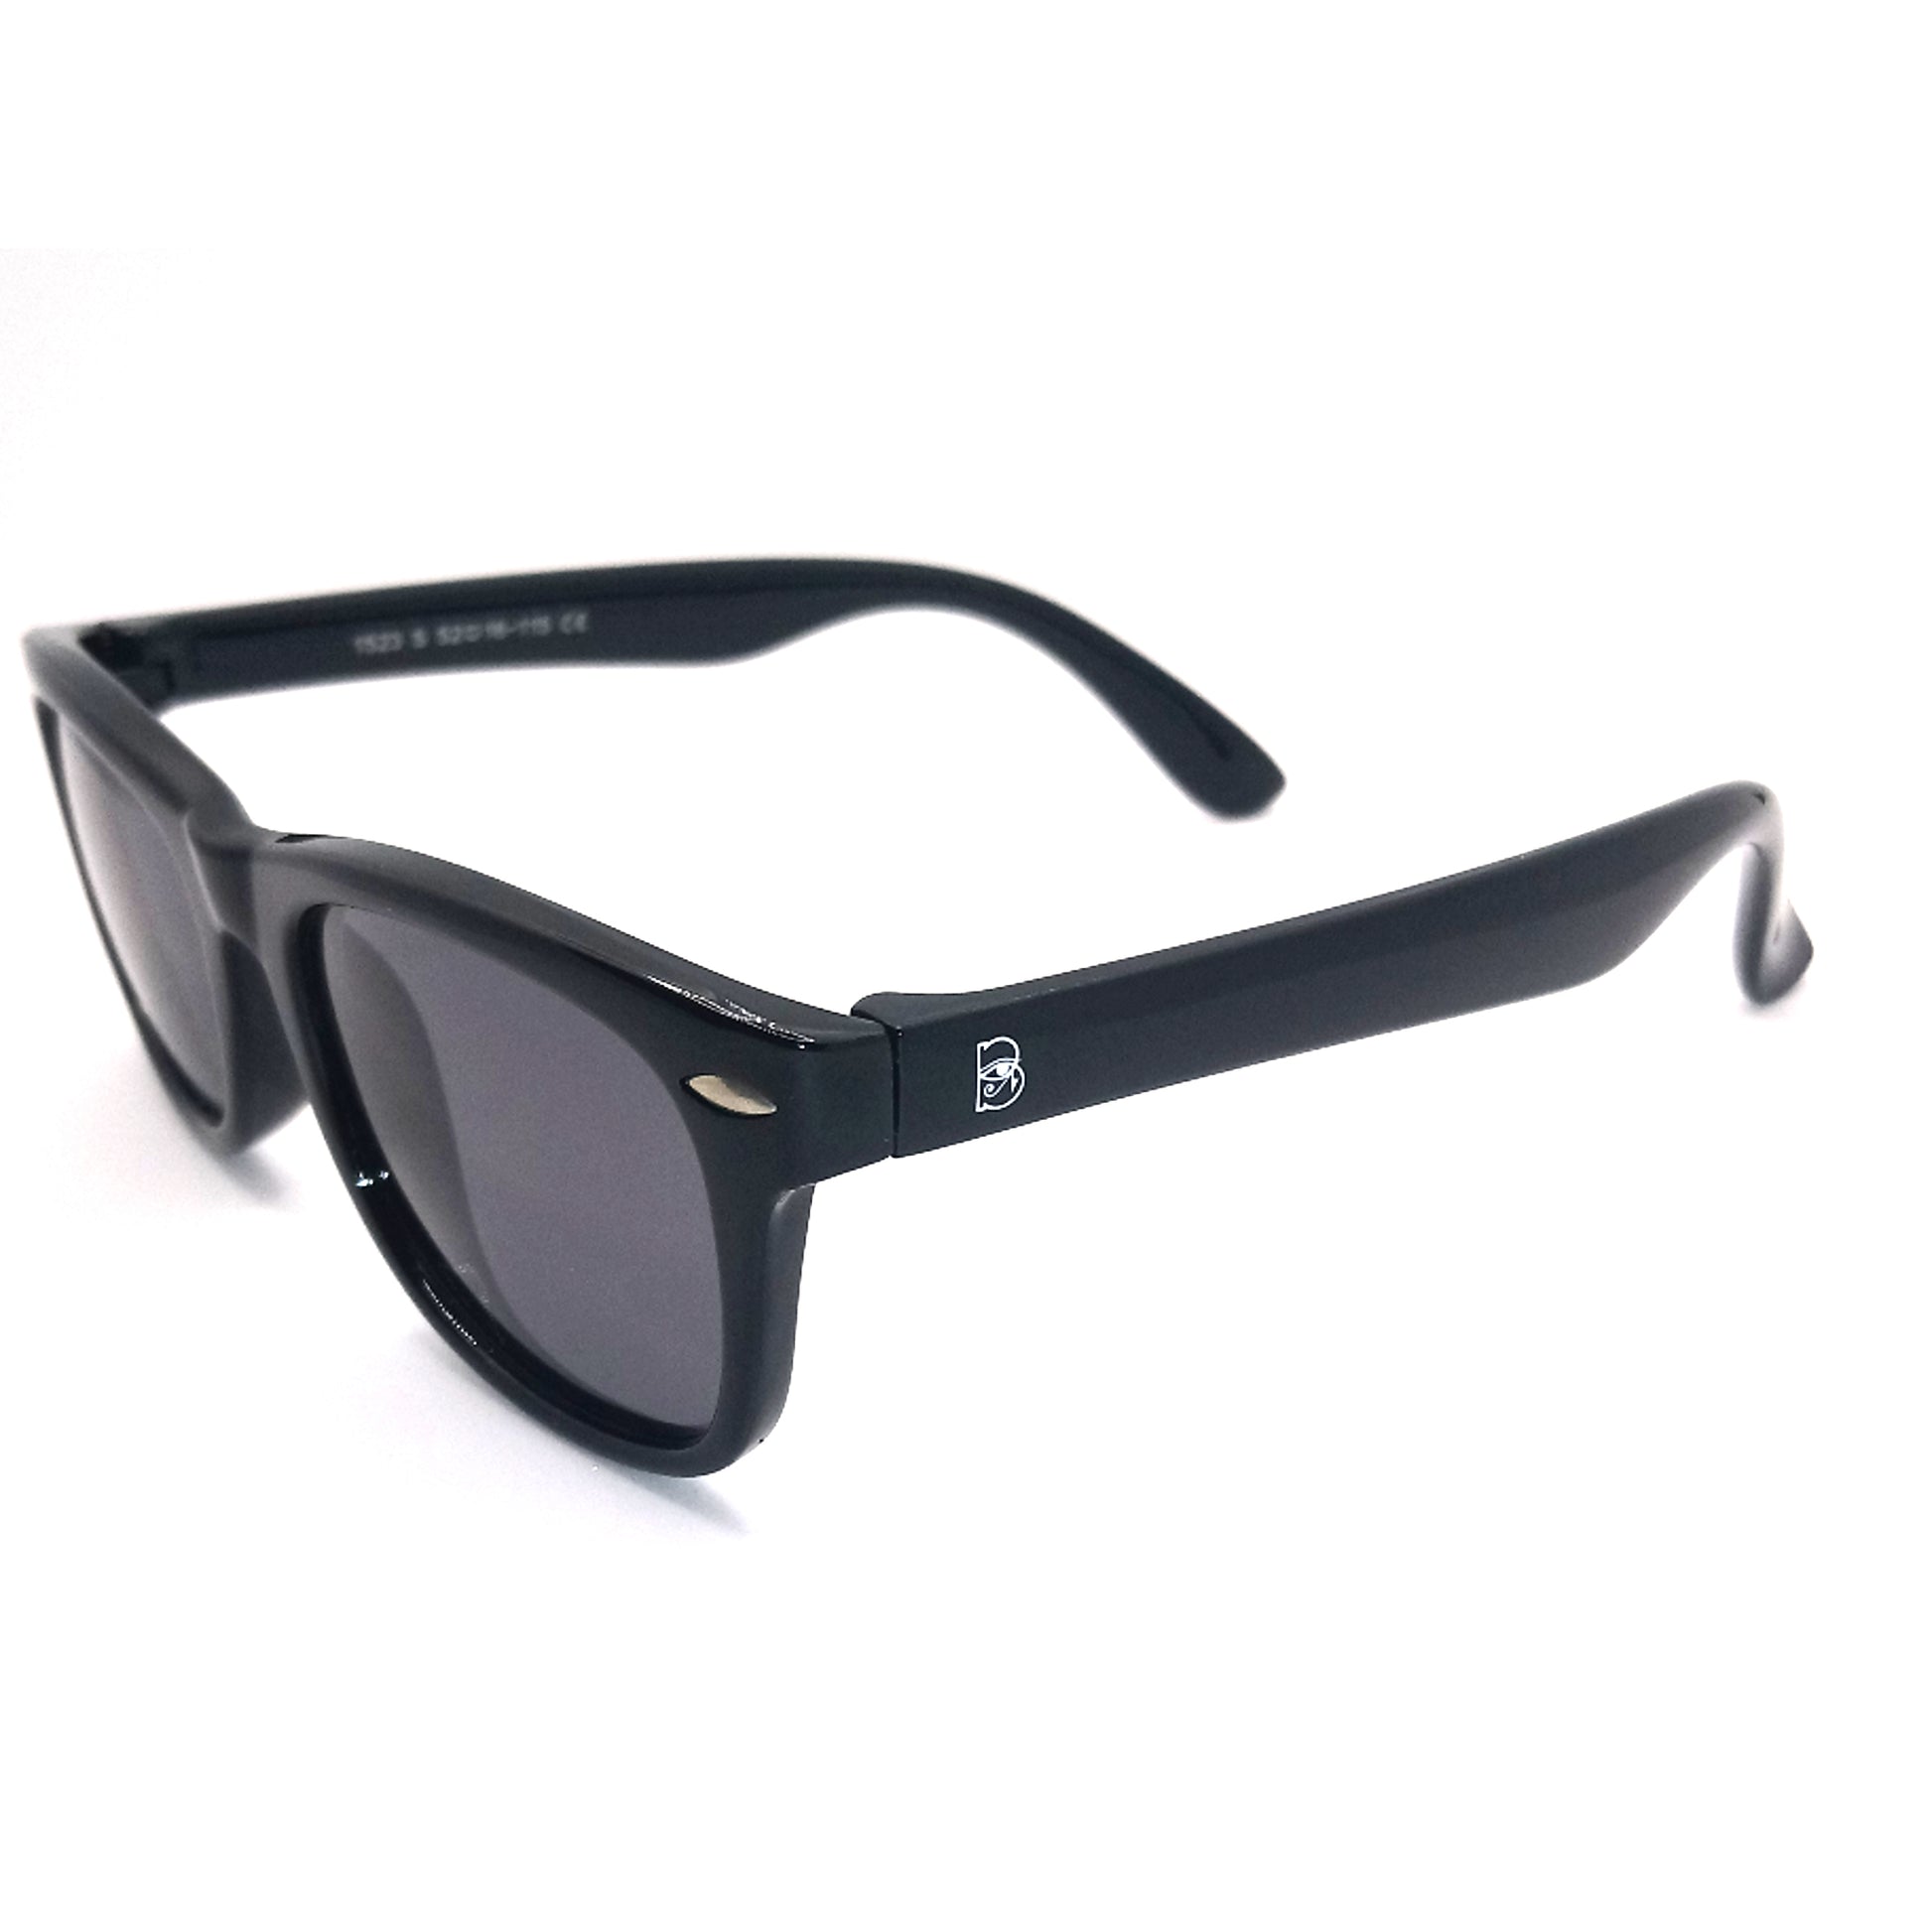 Bprotectedstore Flex Classic Black Children Polarized Sunglasses - Stylish and Safe Eyewear for children-Side